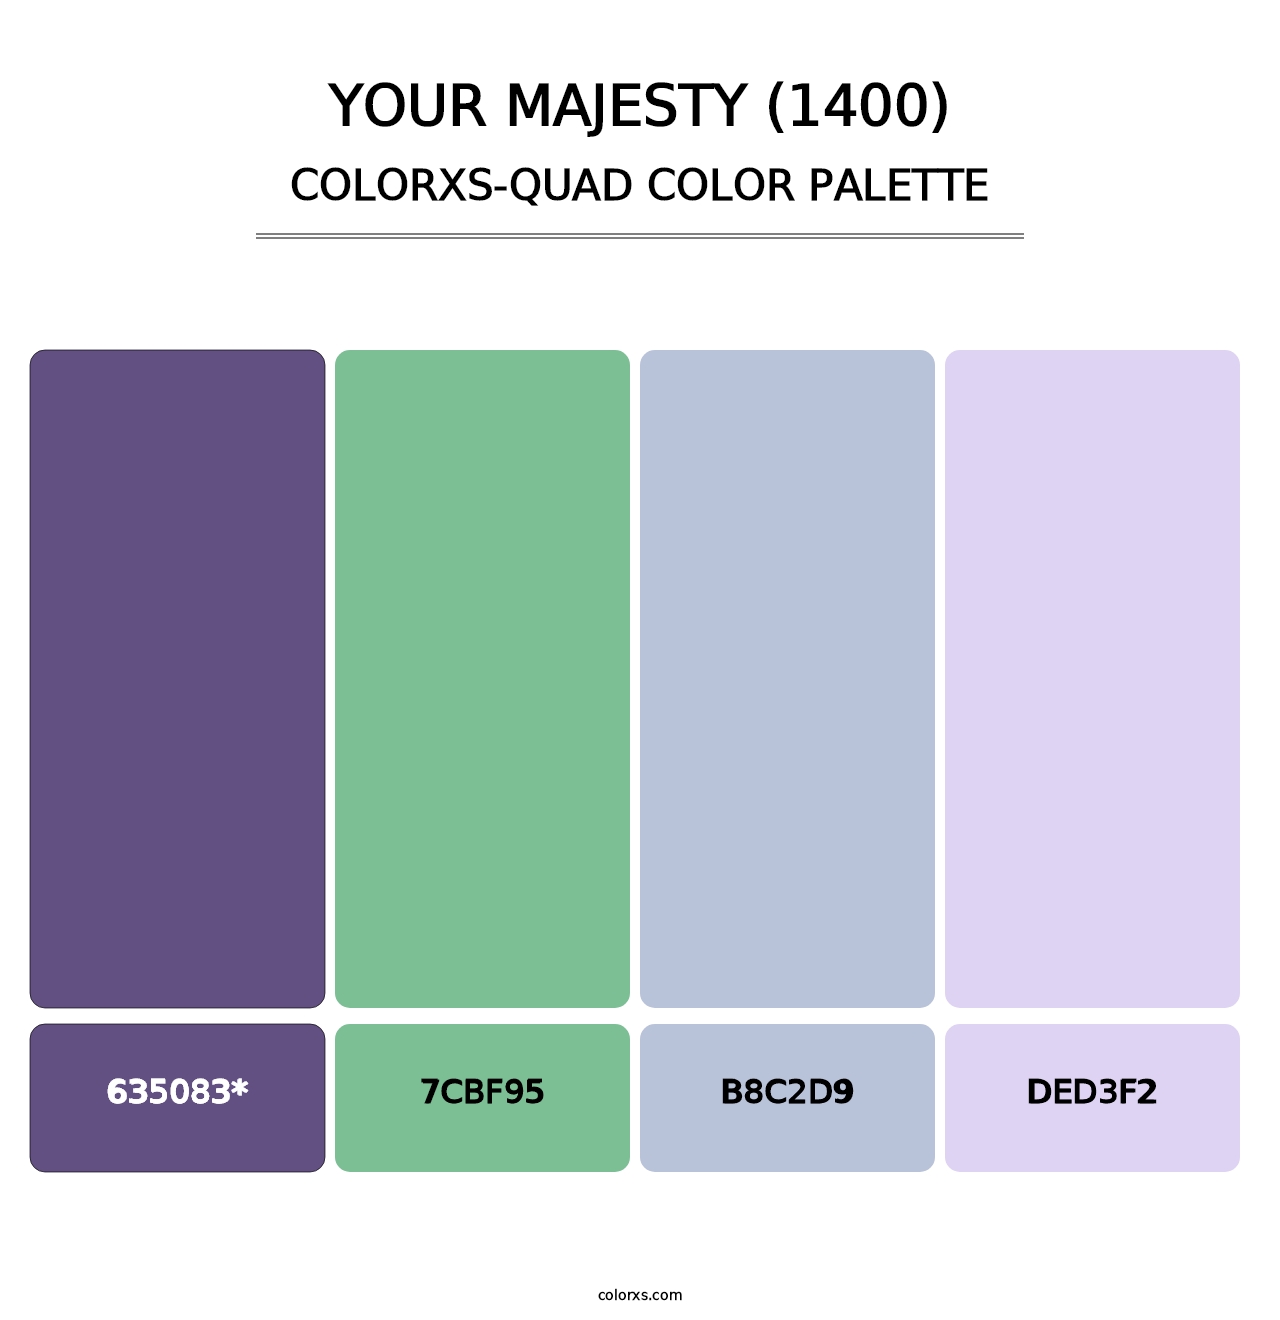 Your Majesty (1400) - Colorxs Quad Palette